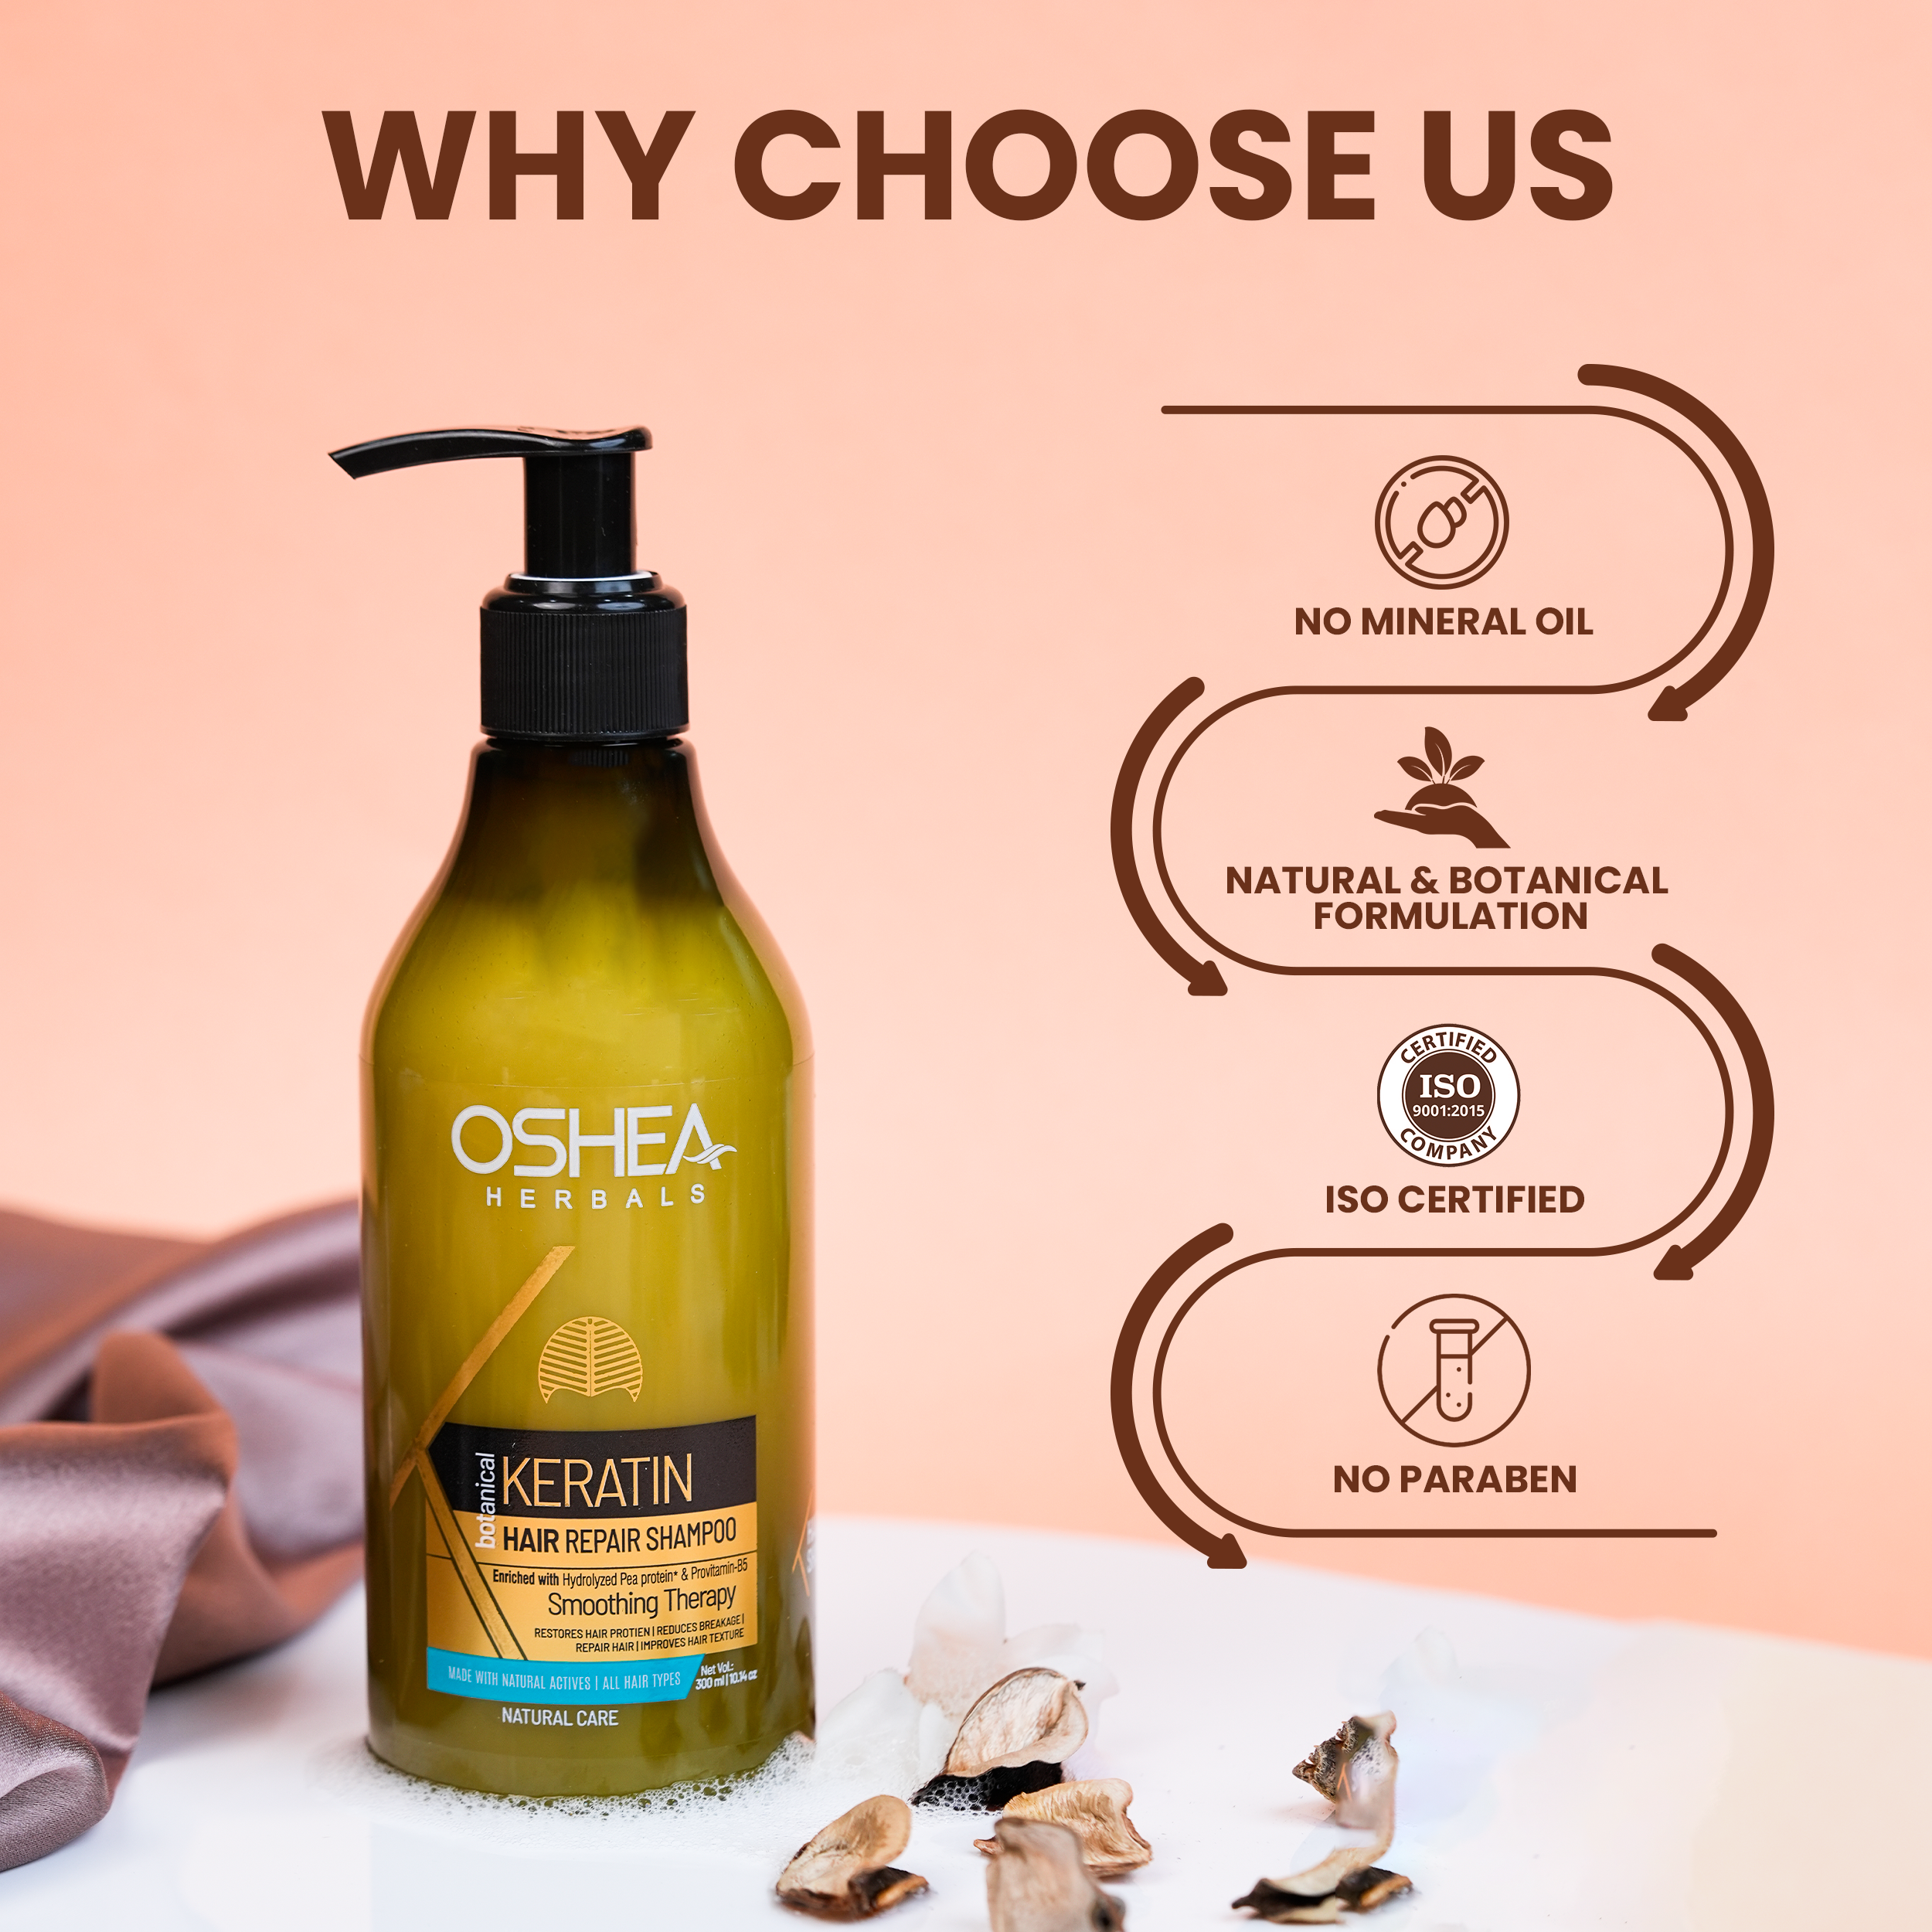  Why Choose Us Keratin Hair Repair Shampoo Oshea Herbals